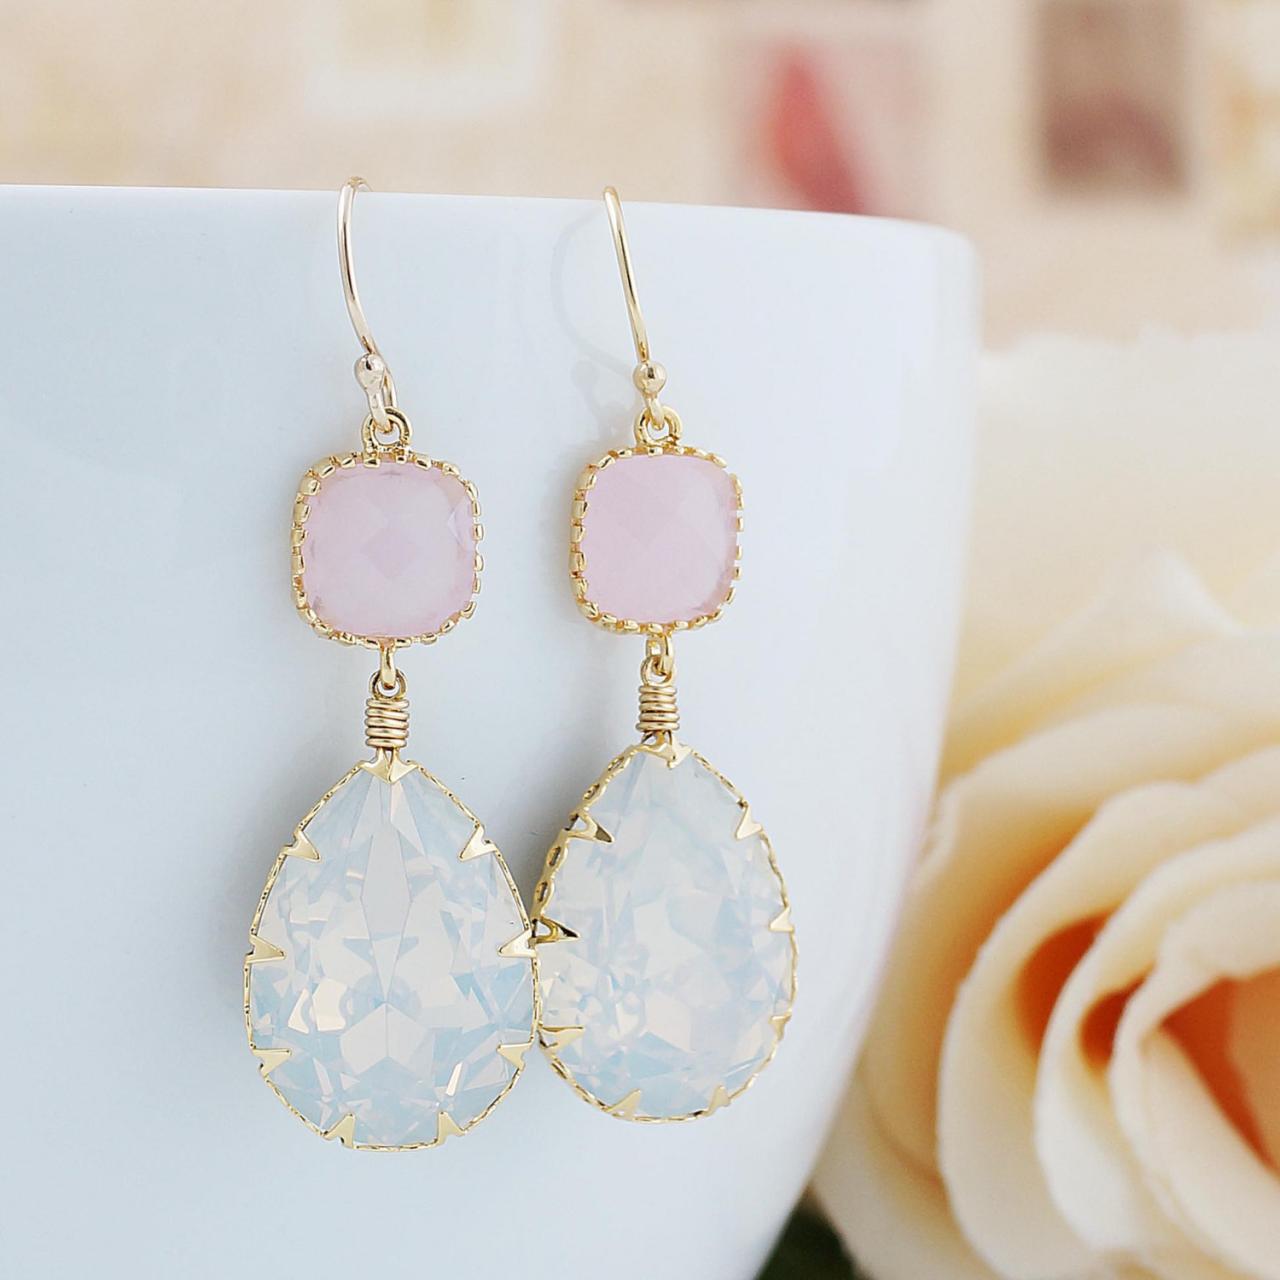 White Opal Swarovski Crystal Gold Filled Earrings - Dangle Earrings Pastel Earrings Gift For Her Weddings Bridesmaid Jewelry Bridesmaid Gift